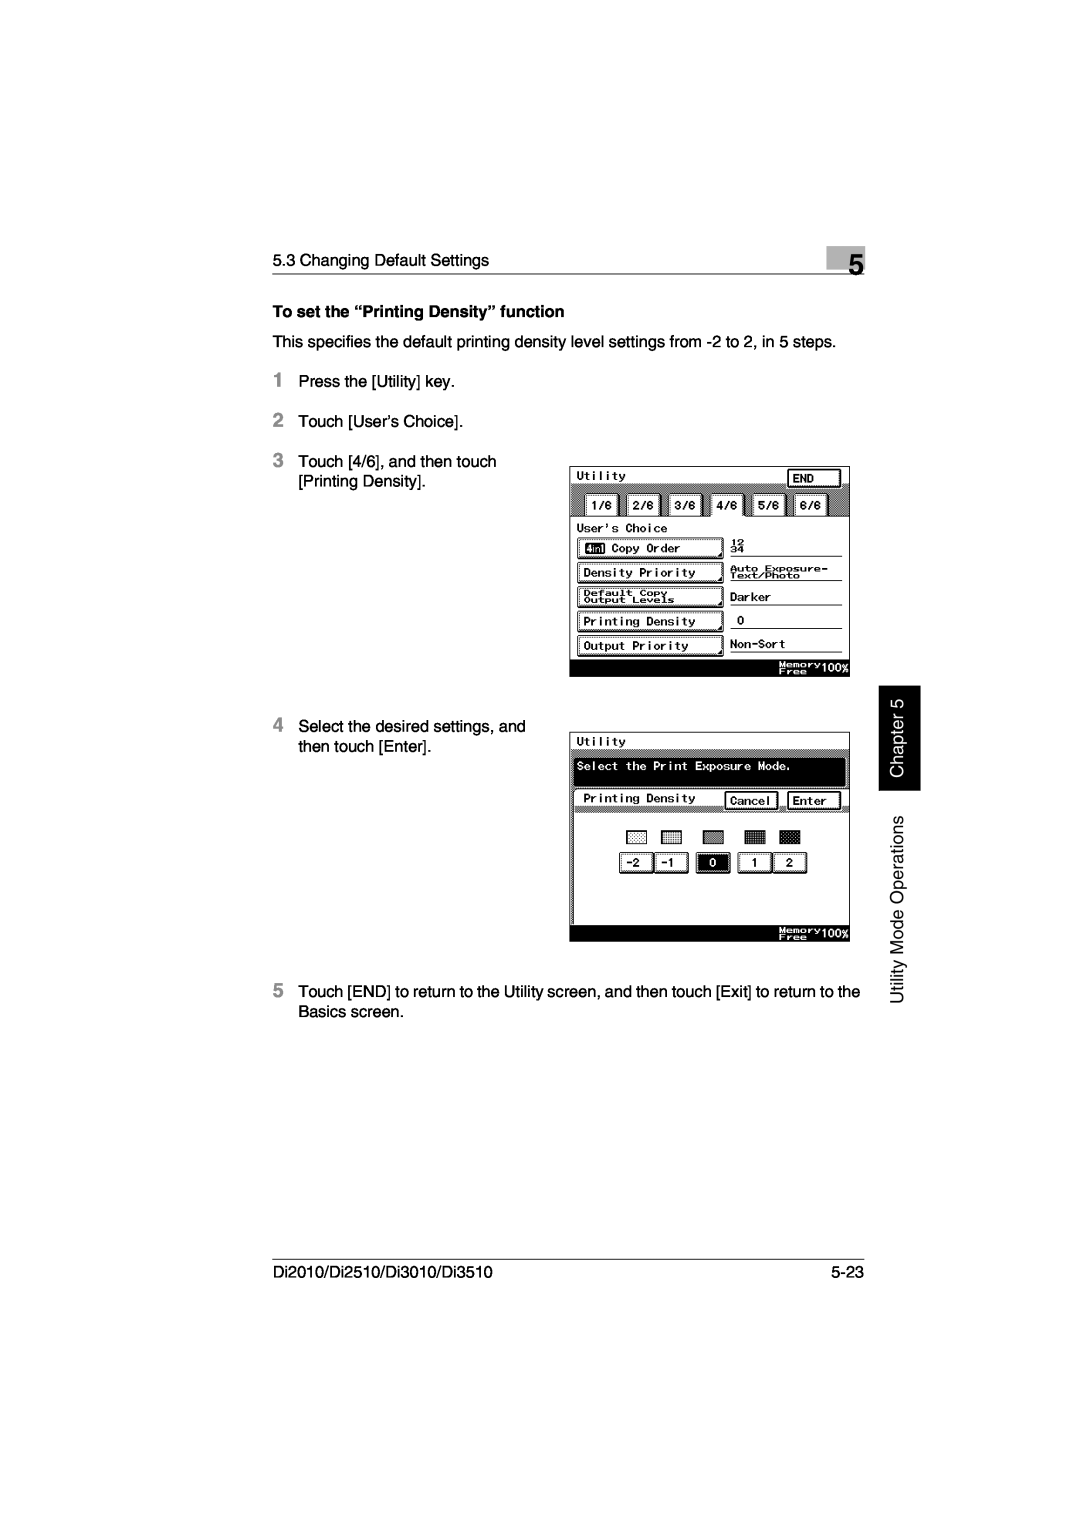 Minolta DI2510, DI2010, DI3010, Di3510 user manual Utility Mode Operations Chapter, To set the “Printing Density” function 